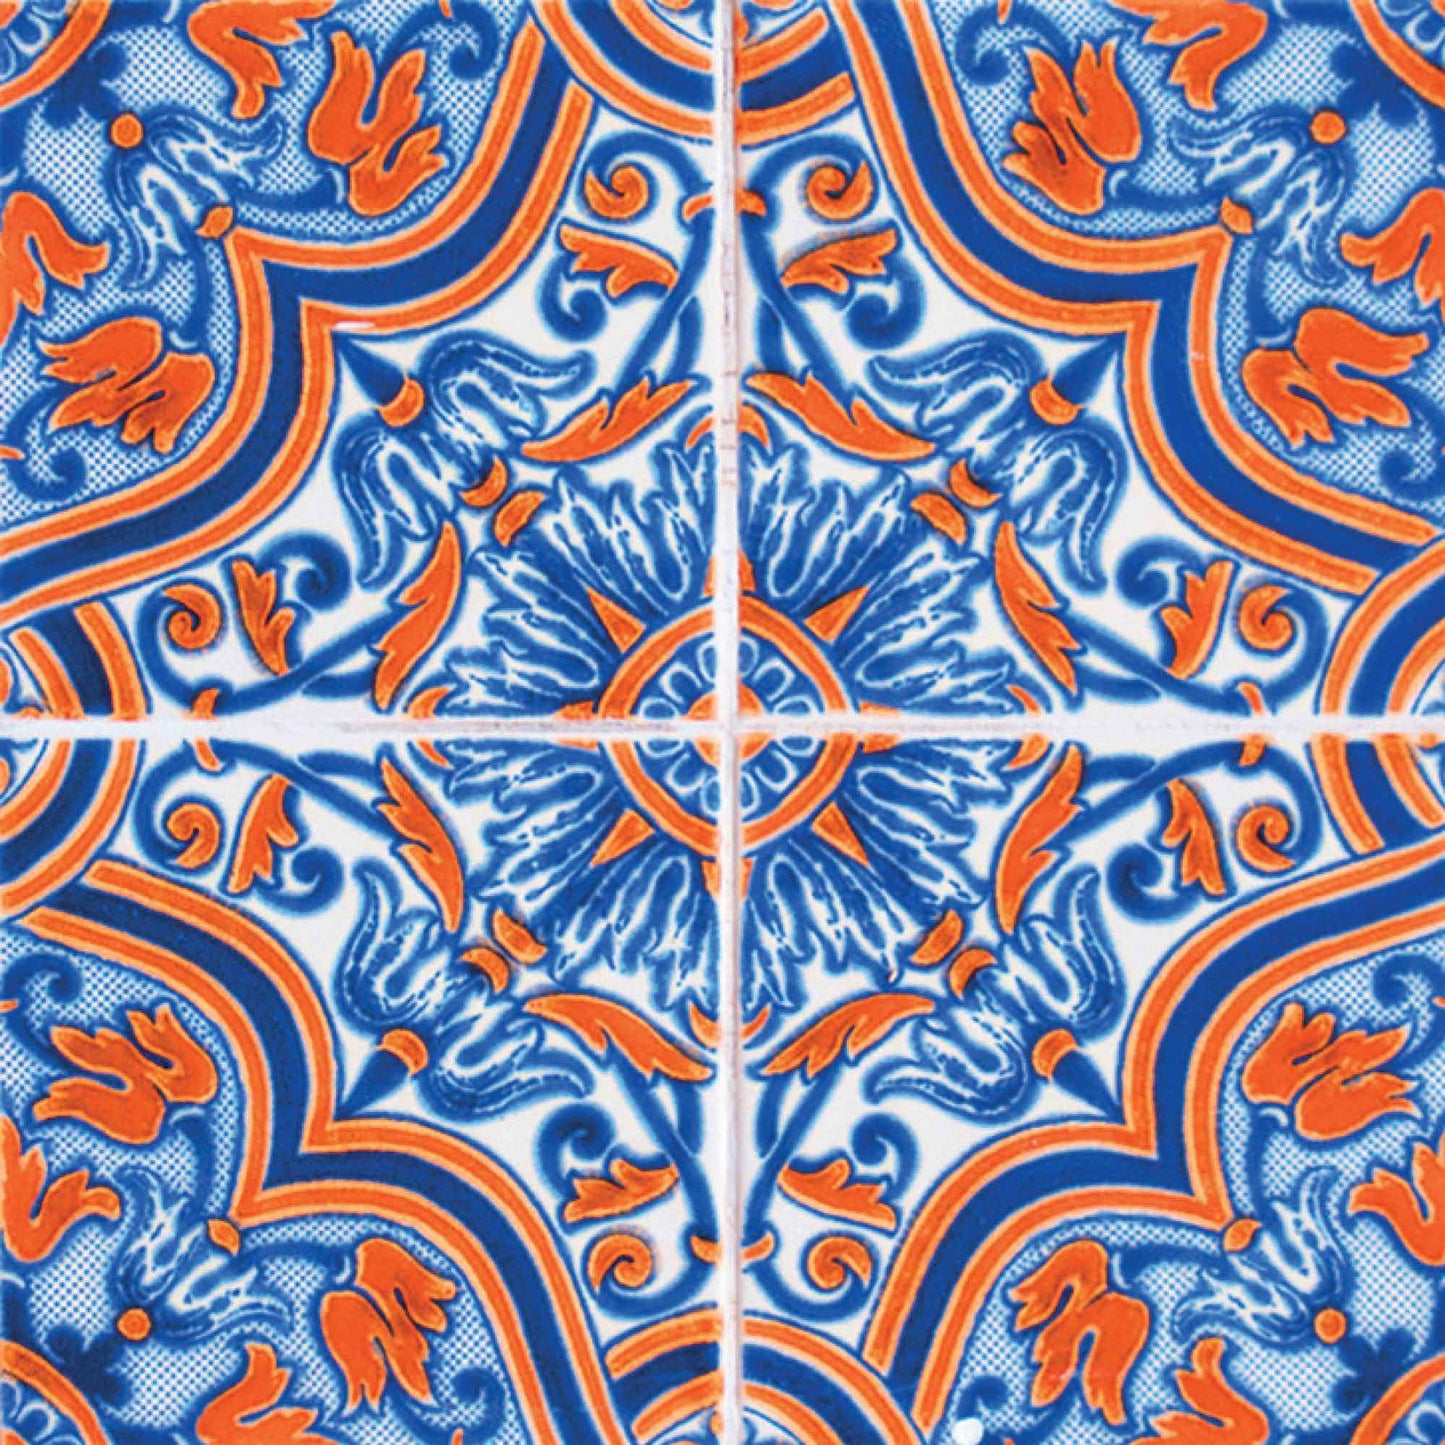 4" X 4" Blue Warm Tones Mosaic Peel And Stick Tiles